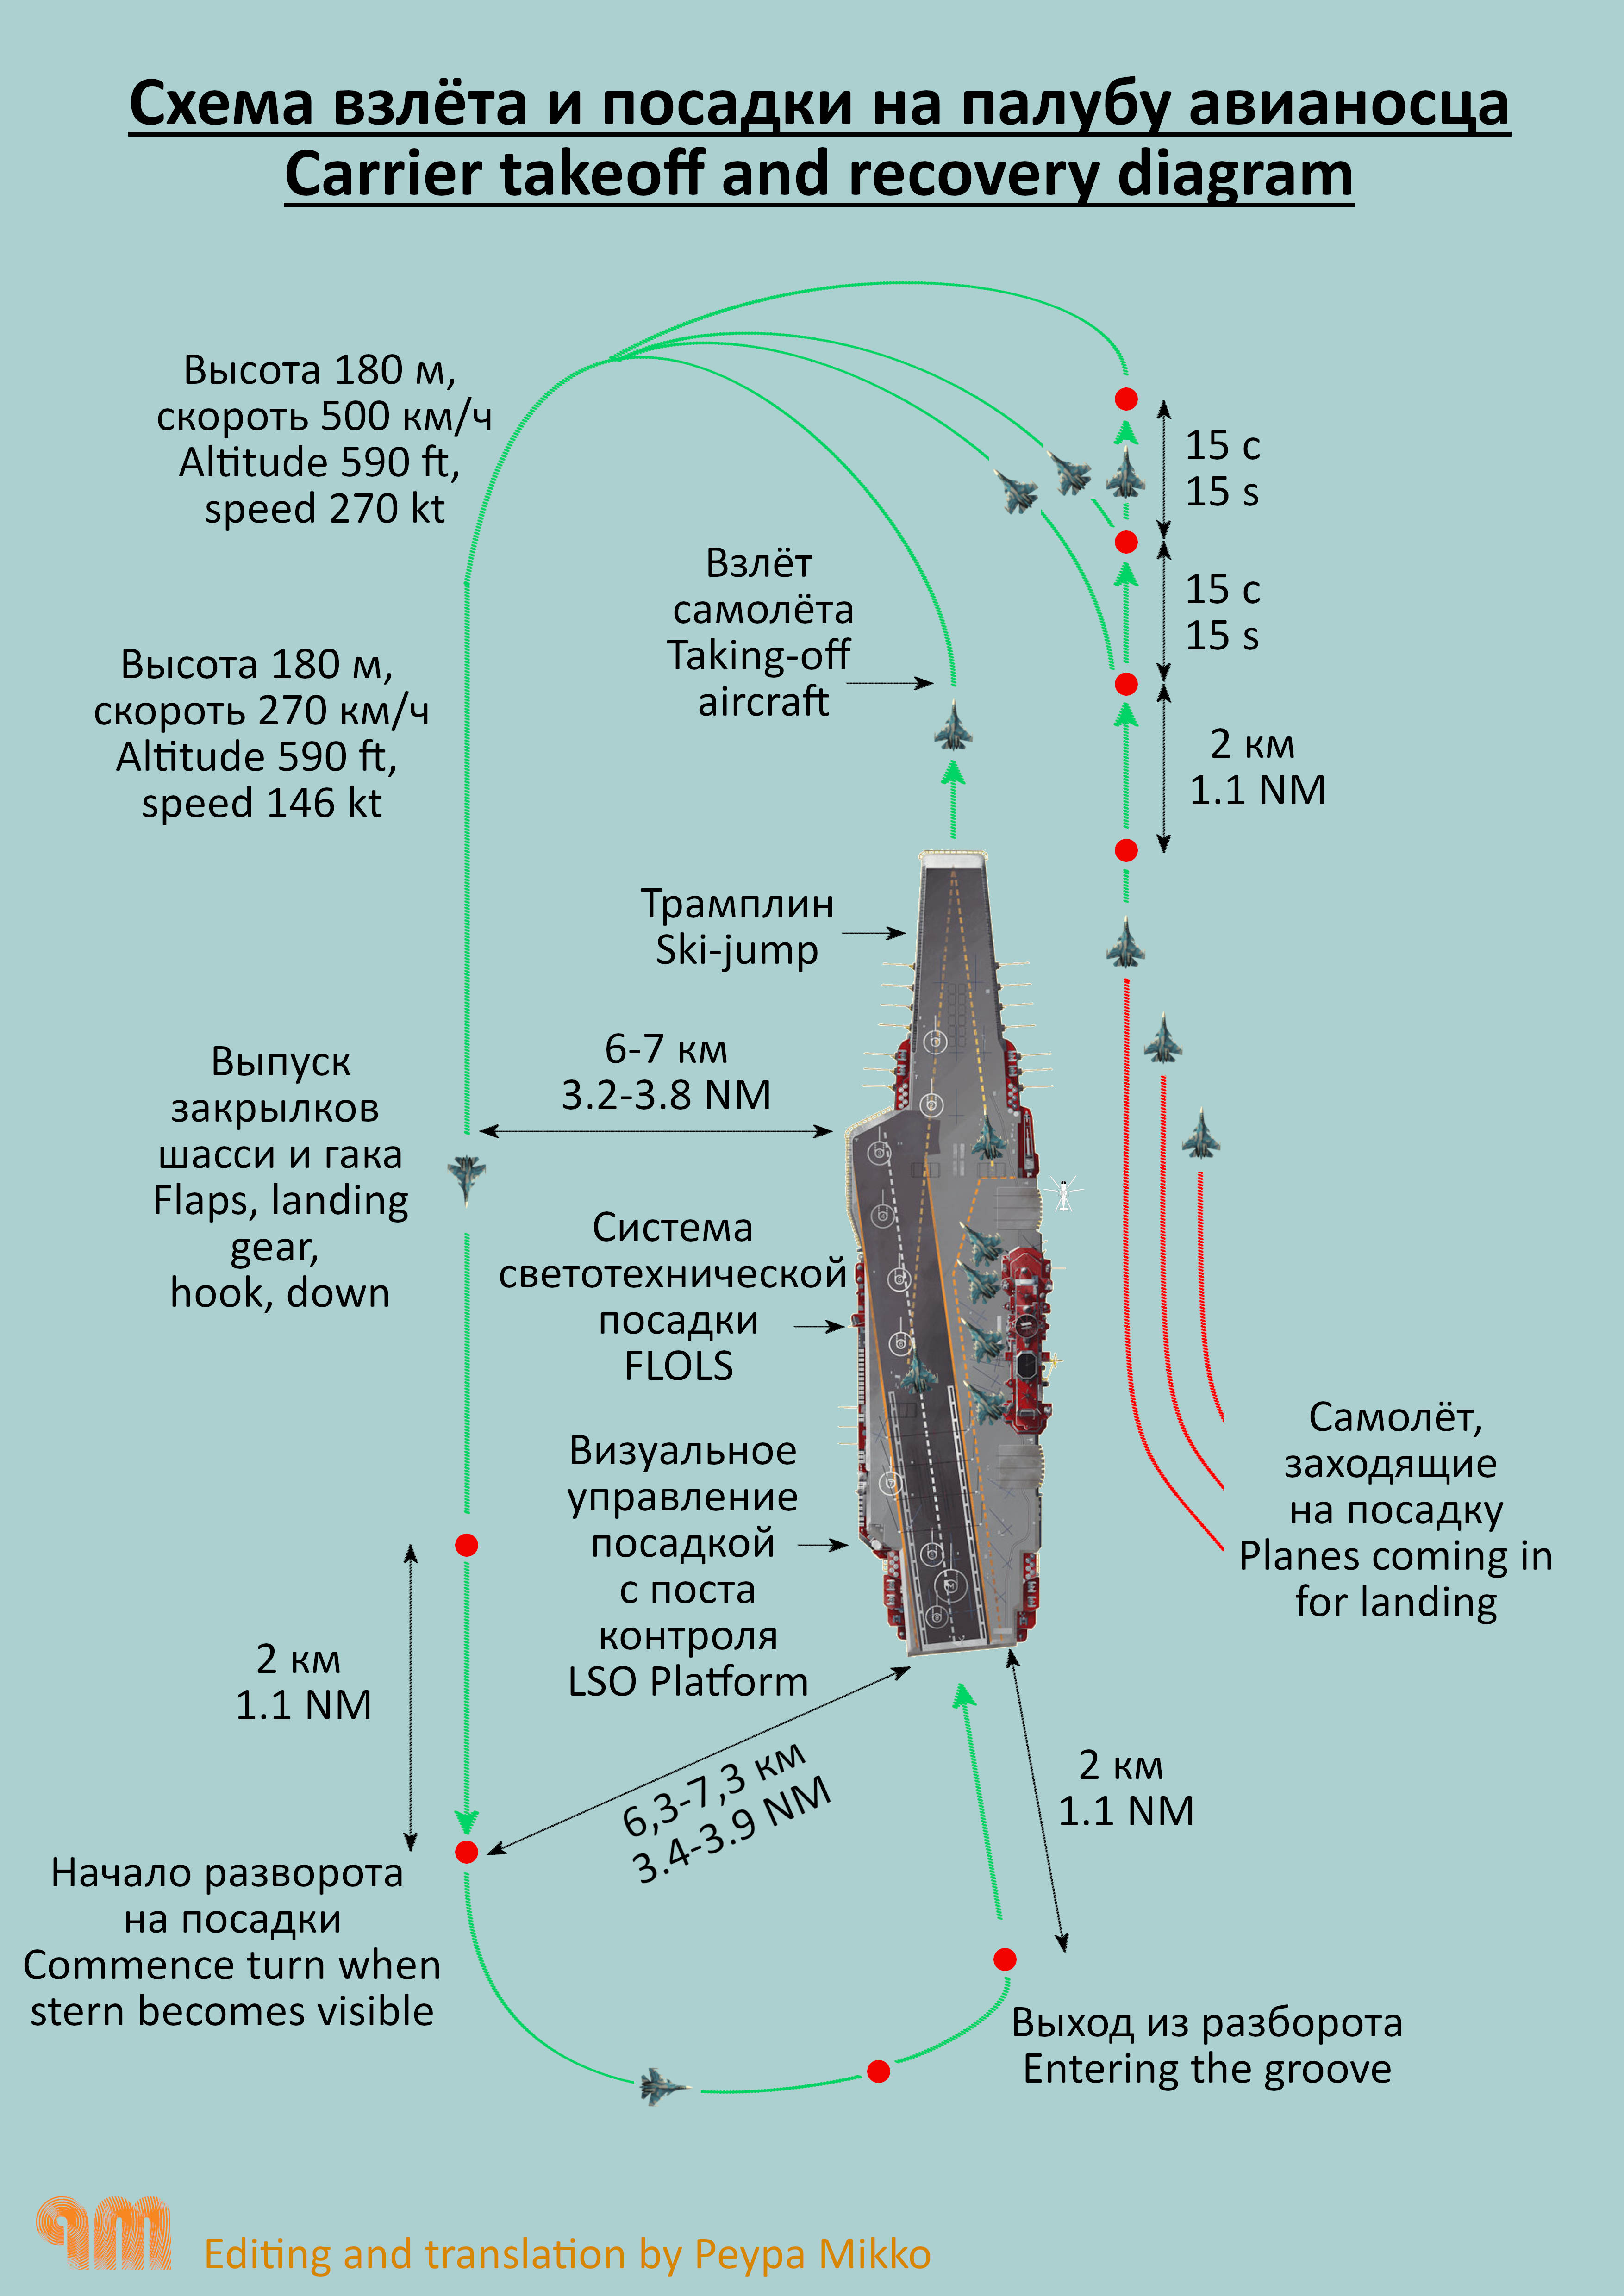 Kuznetsov Su-33 Carrier Takeoff and Recovery Diagram EN/RU v2.0